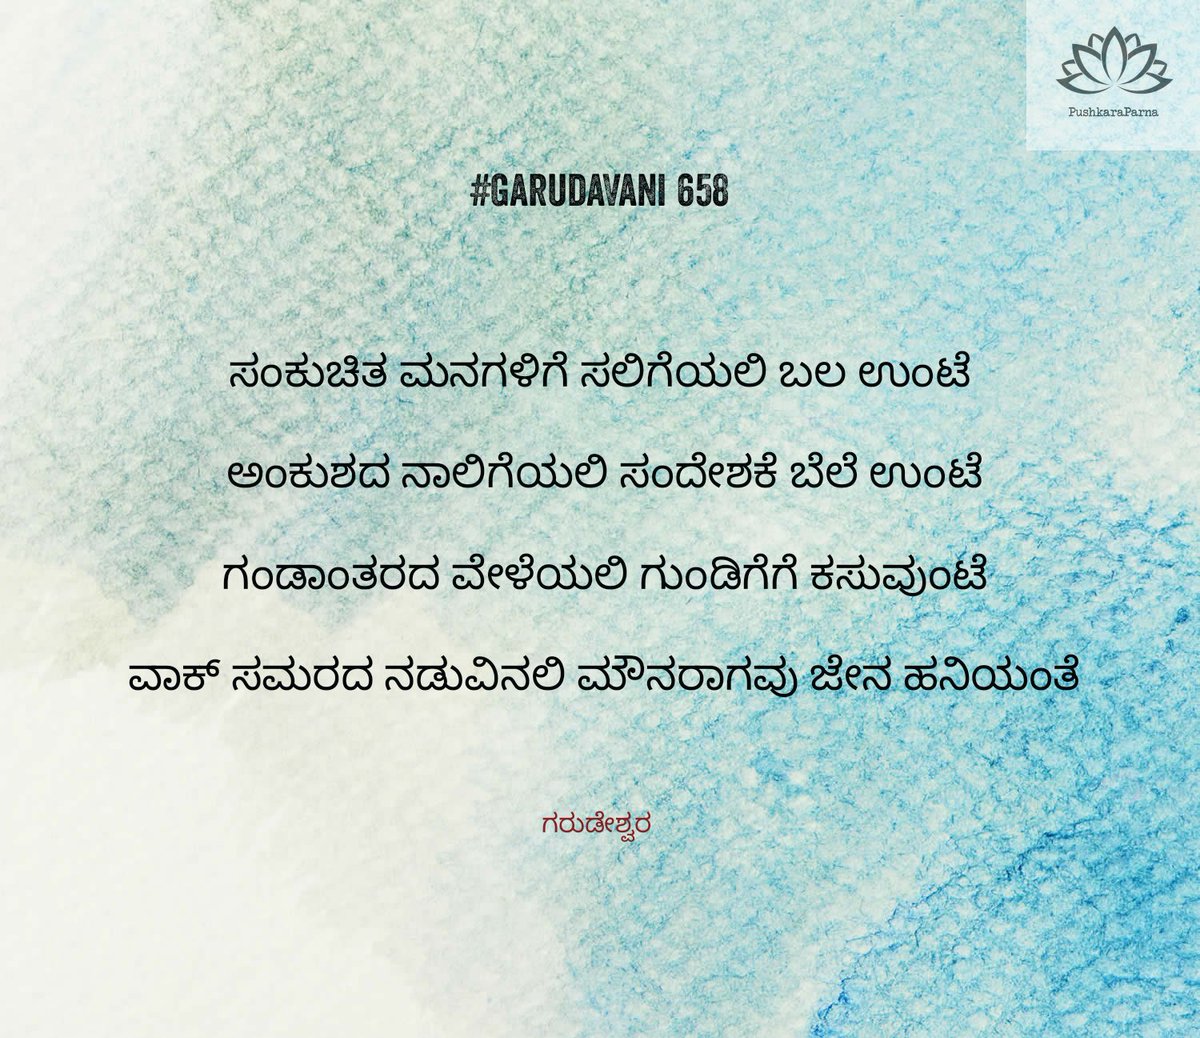 GarudaVani 658

#BhagavadVakya #GarudaVani #DailyWisdom #selfdevelopment #motivation #Kannada #spriritualawakening #life #guru
#wisdom #knowledge